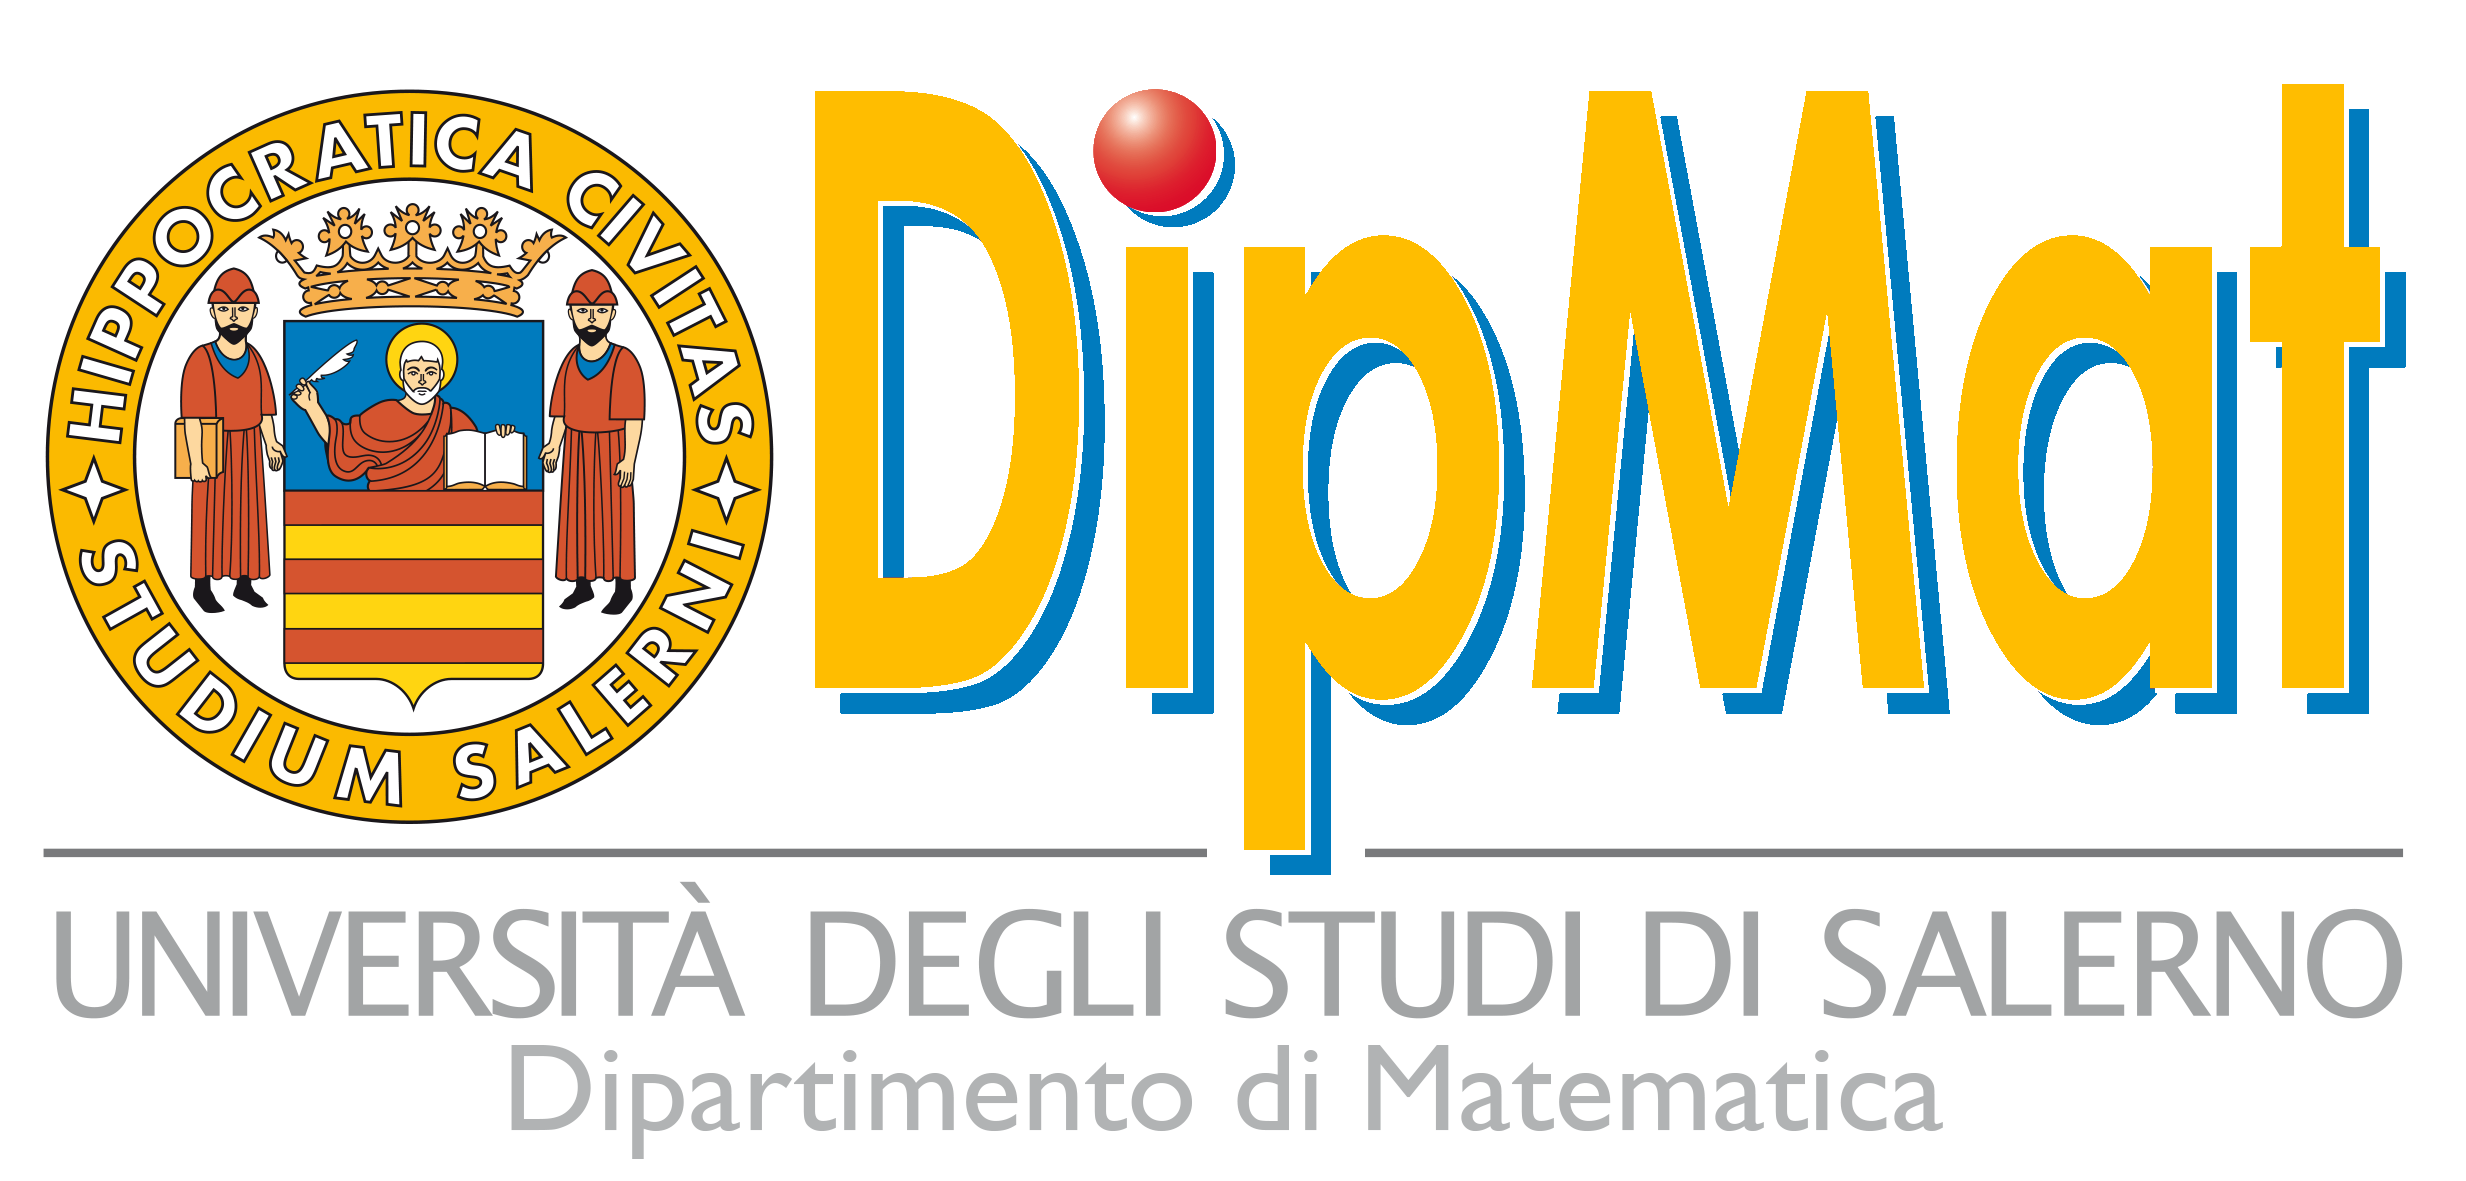 Dipartimento Matematica Salerno